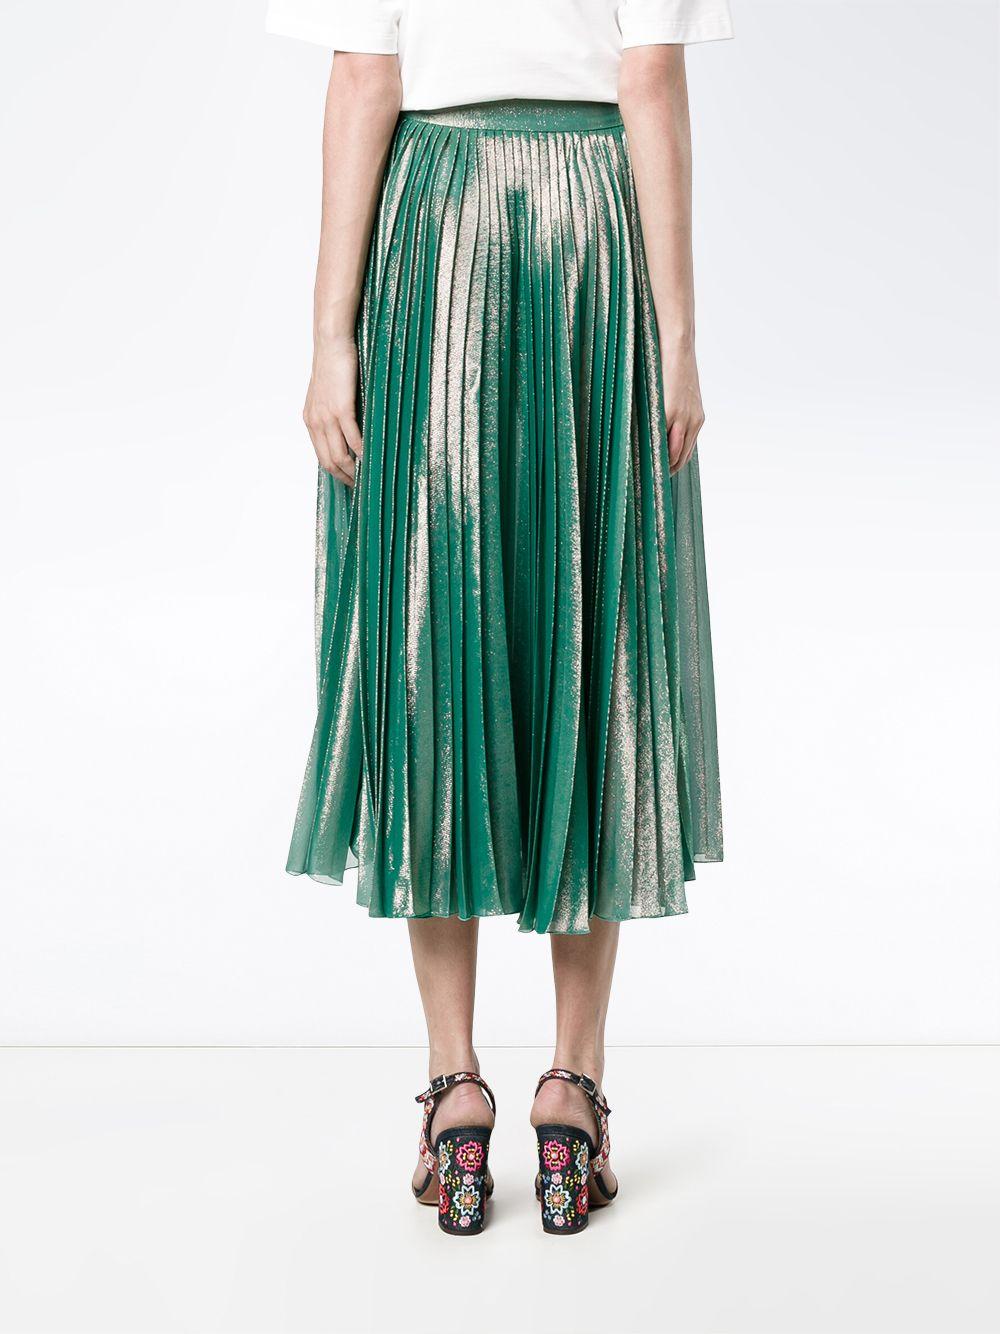 Gucci Pleated Metallic Skirt in Green | Lyst